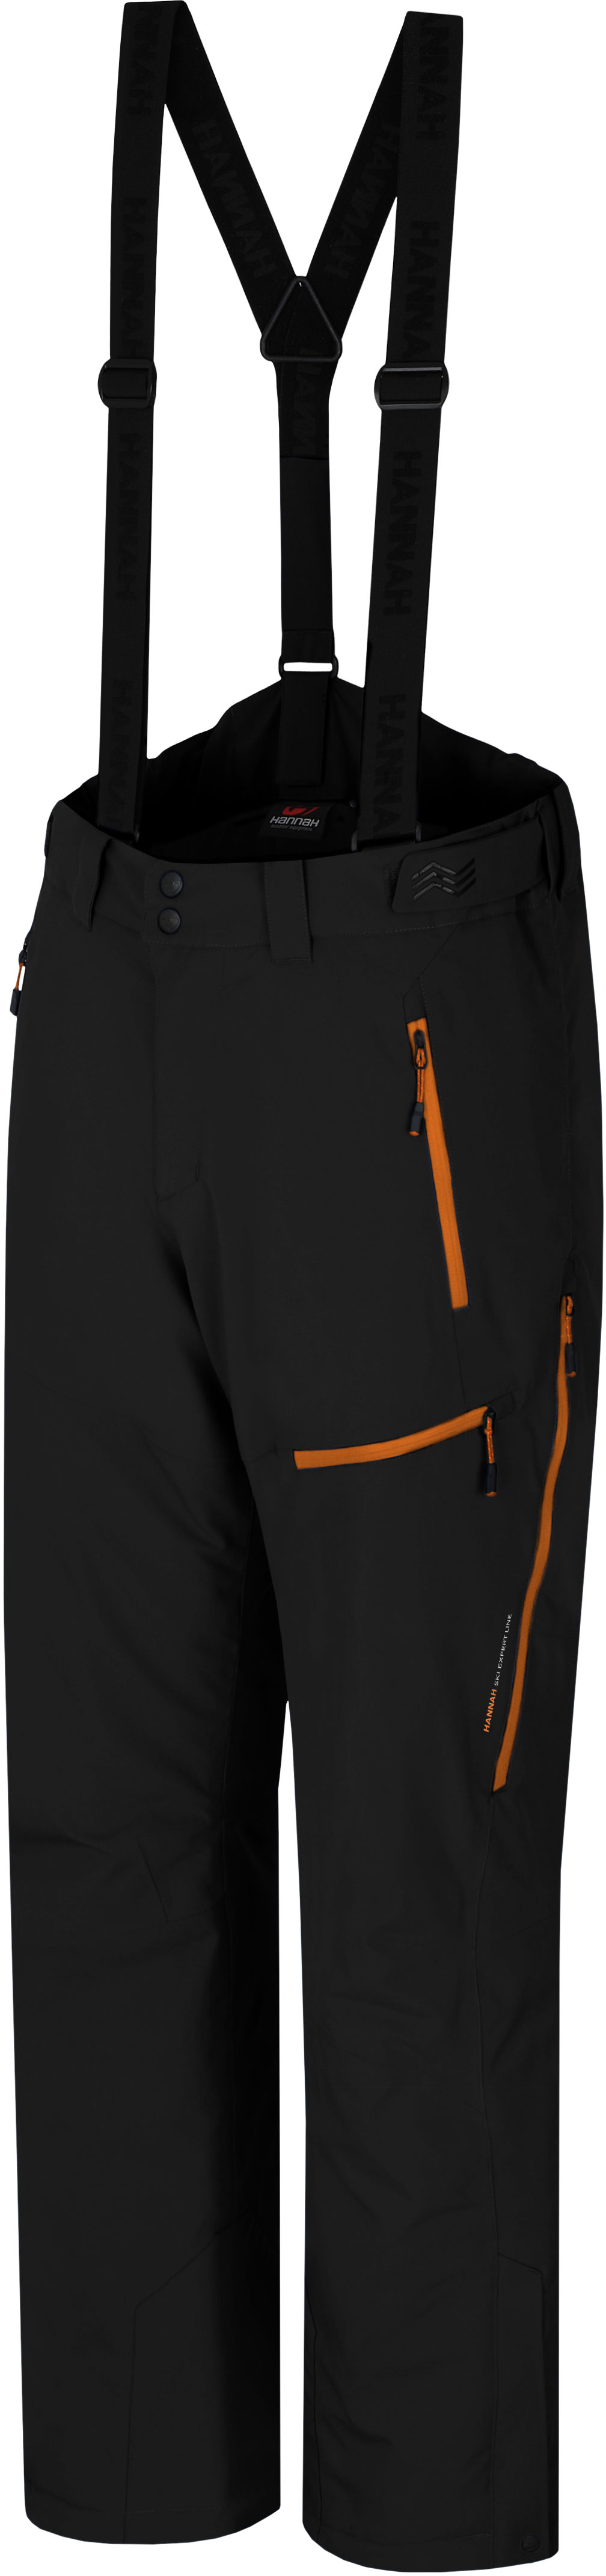 Men's ski trousers with a membrane